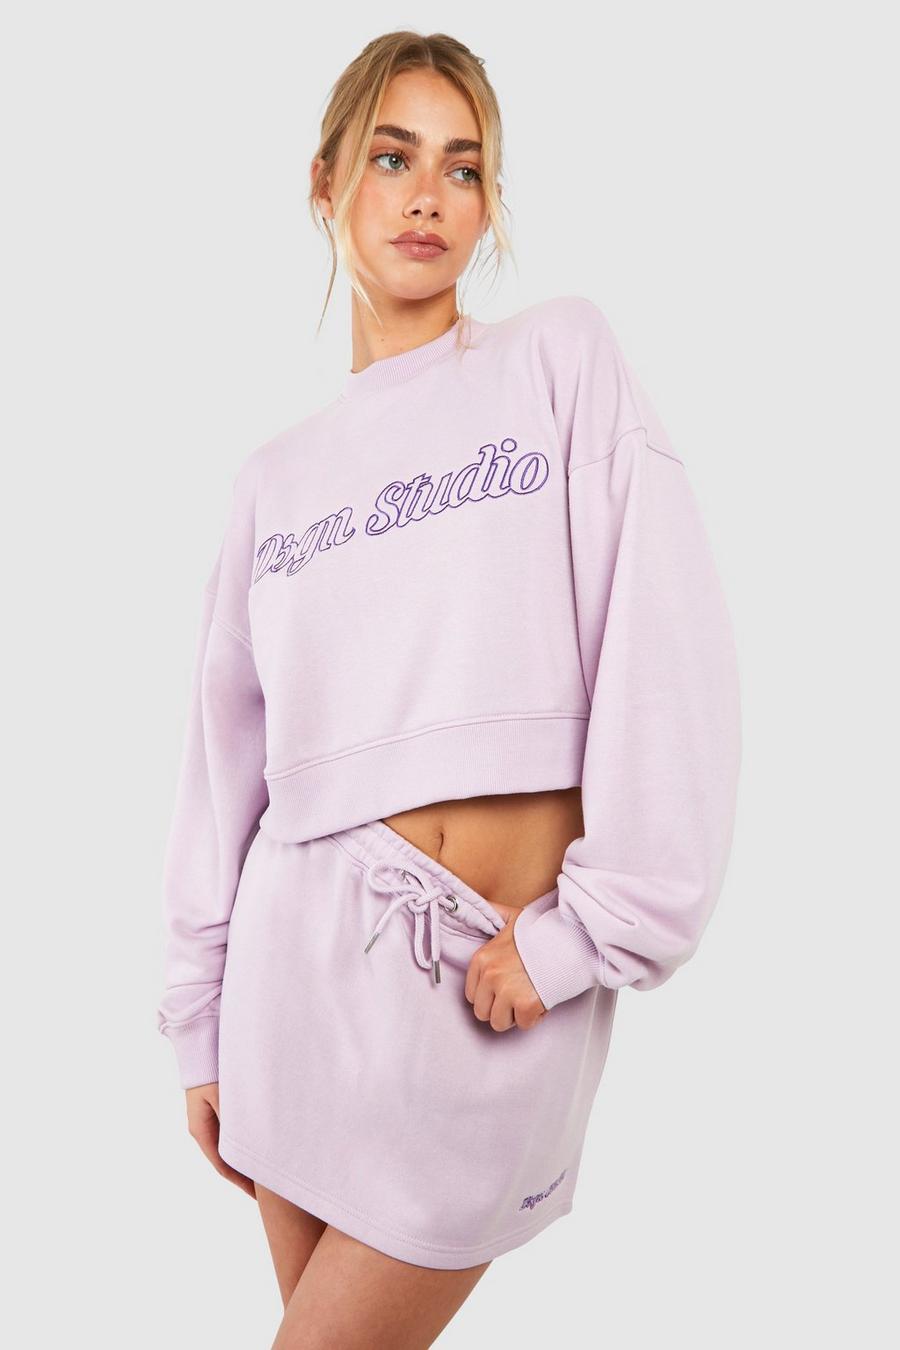 Lilac Dsgn Studio Script Kort sweatshirt i boxig modell